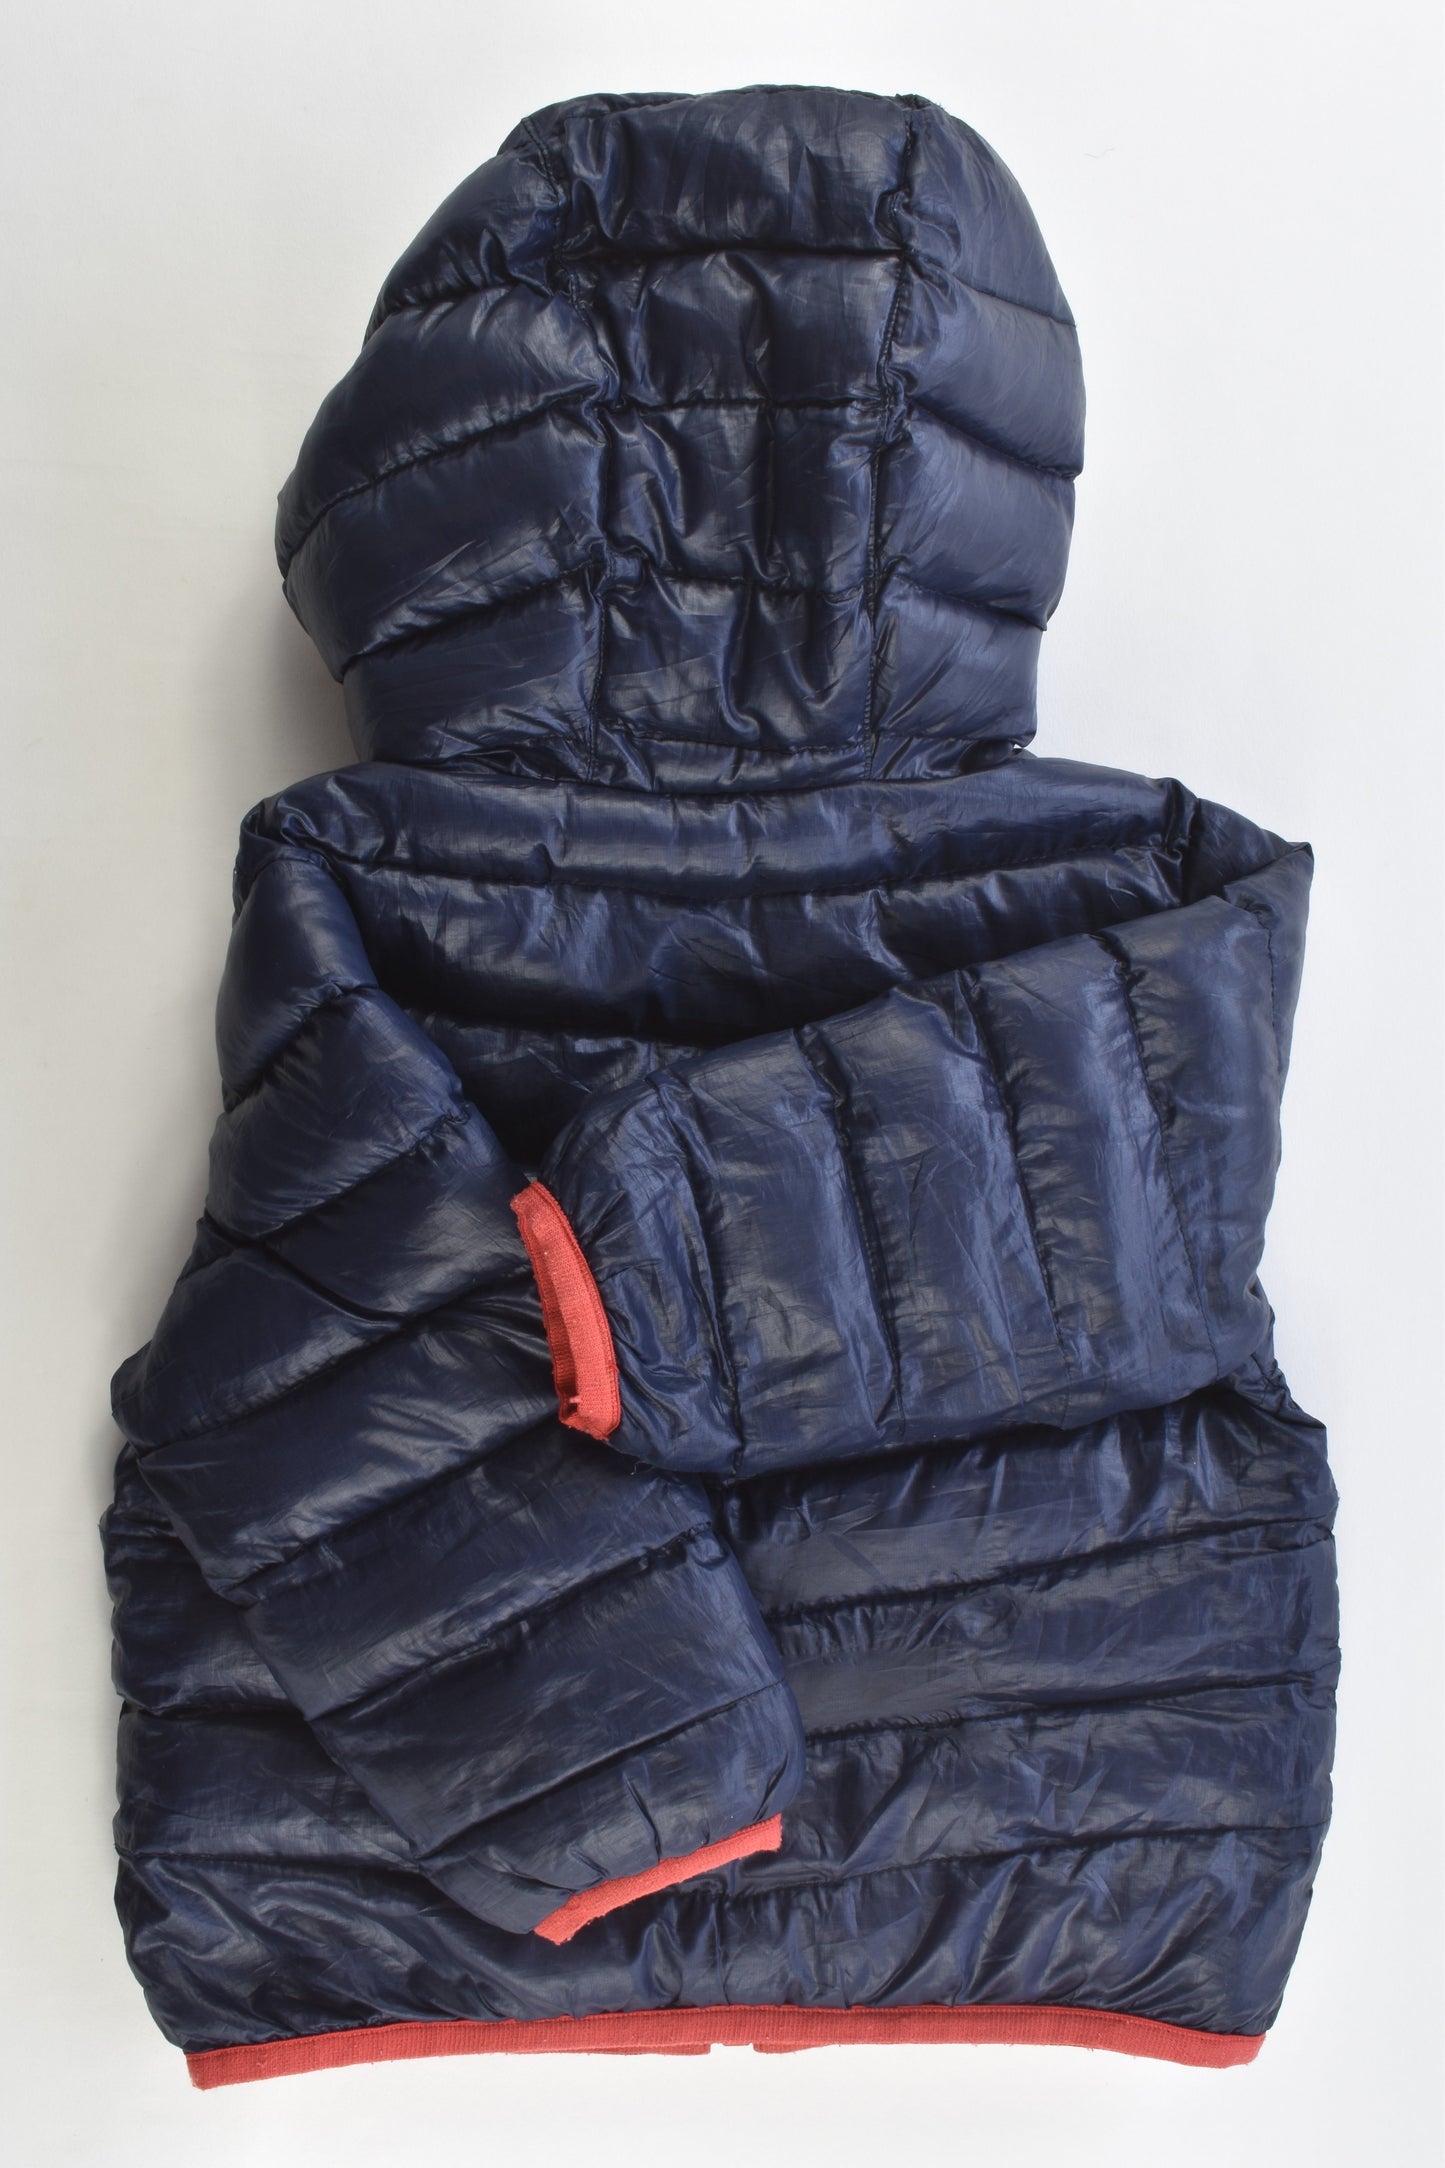 Allo & Lugh Size 90 cm (2) Warm Hooded Winter Jacket